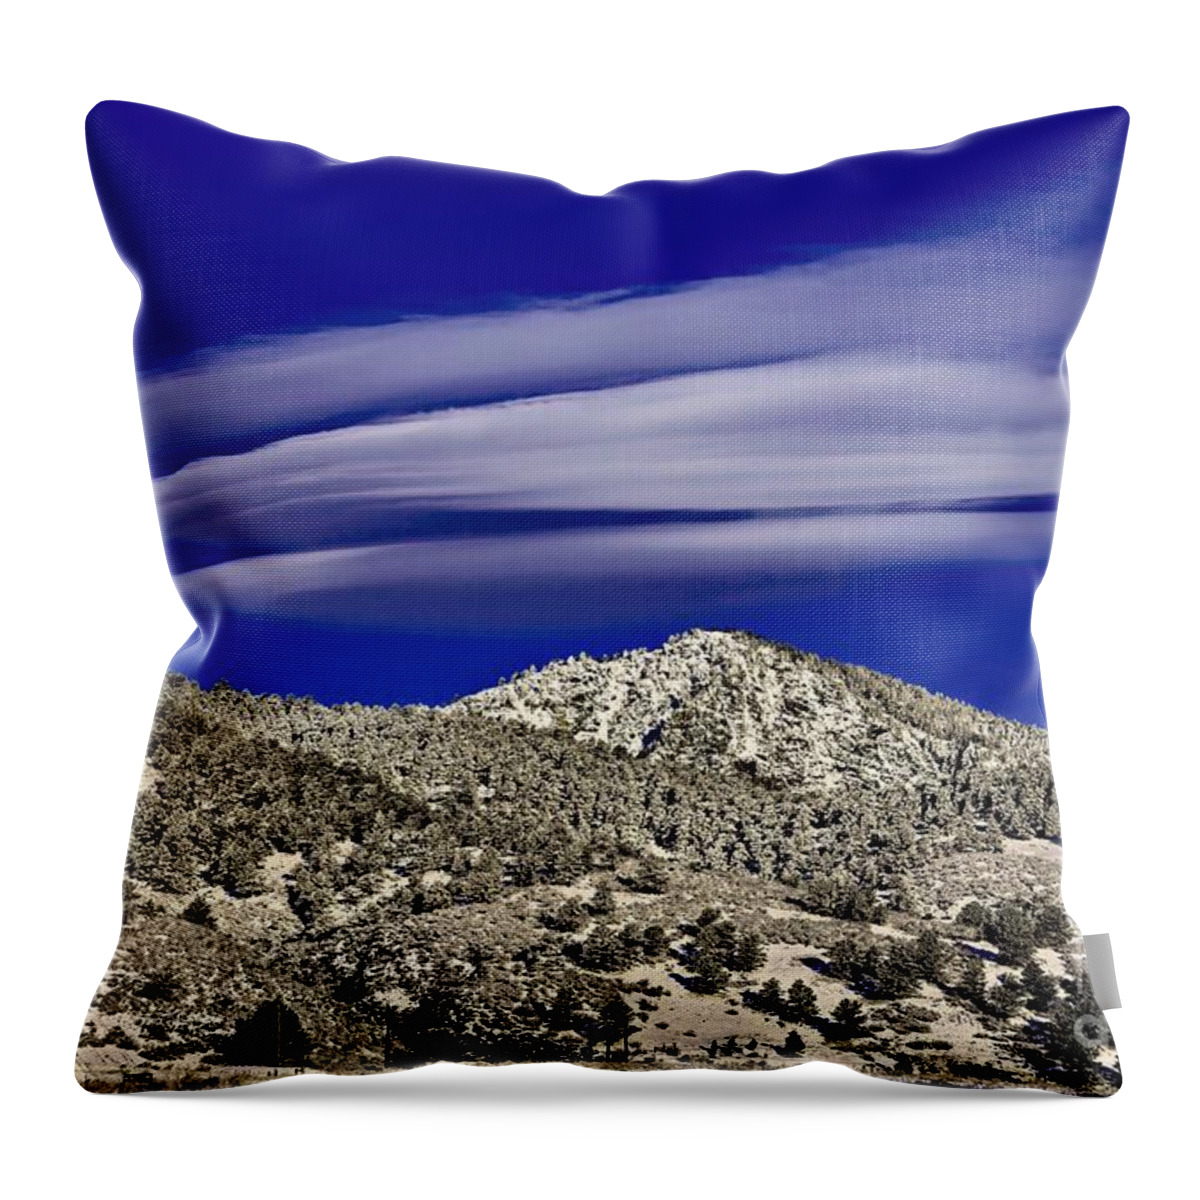 Jon Burch Throw Pillow featuring the photograph Fresh Powder On The Hills by Jon Burch Photography